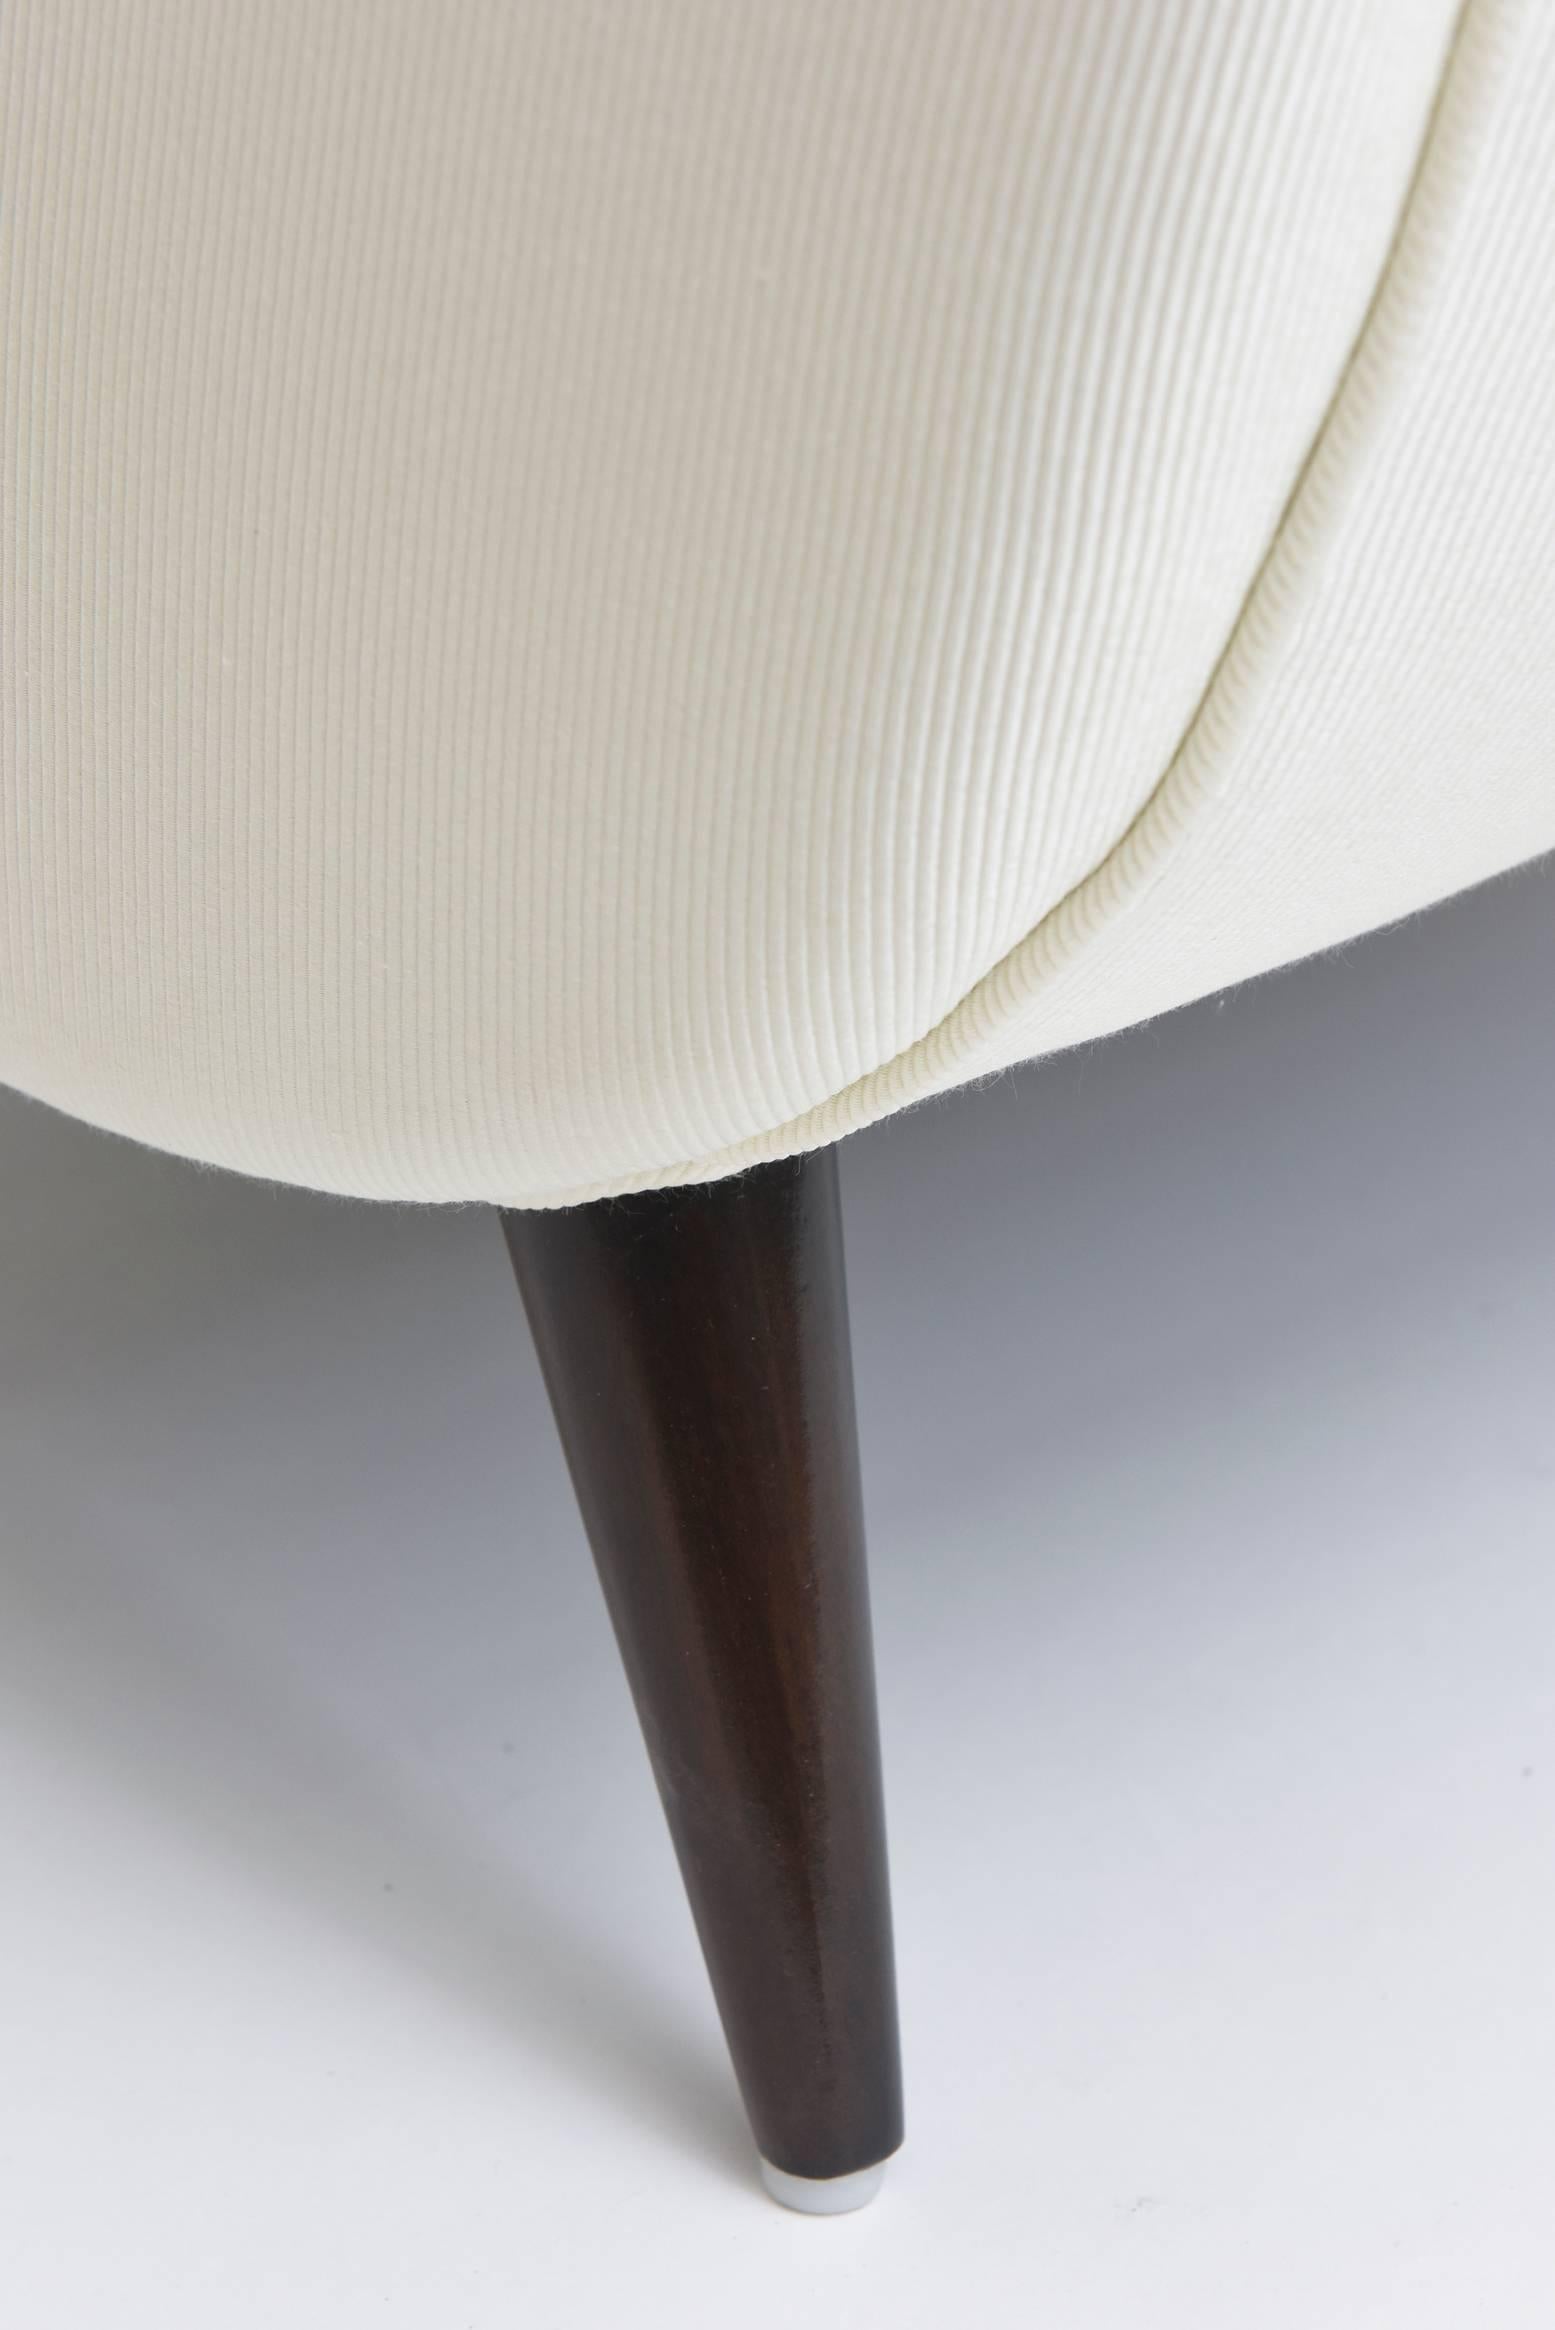 Midcentury Melchiorre Bega Italian Modern Dark Walnut Upholstered Club Chairs 1